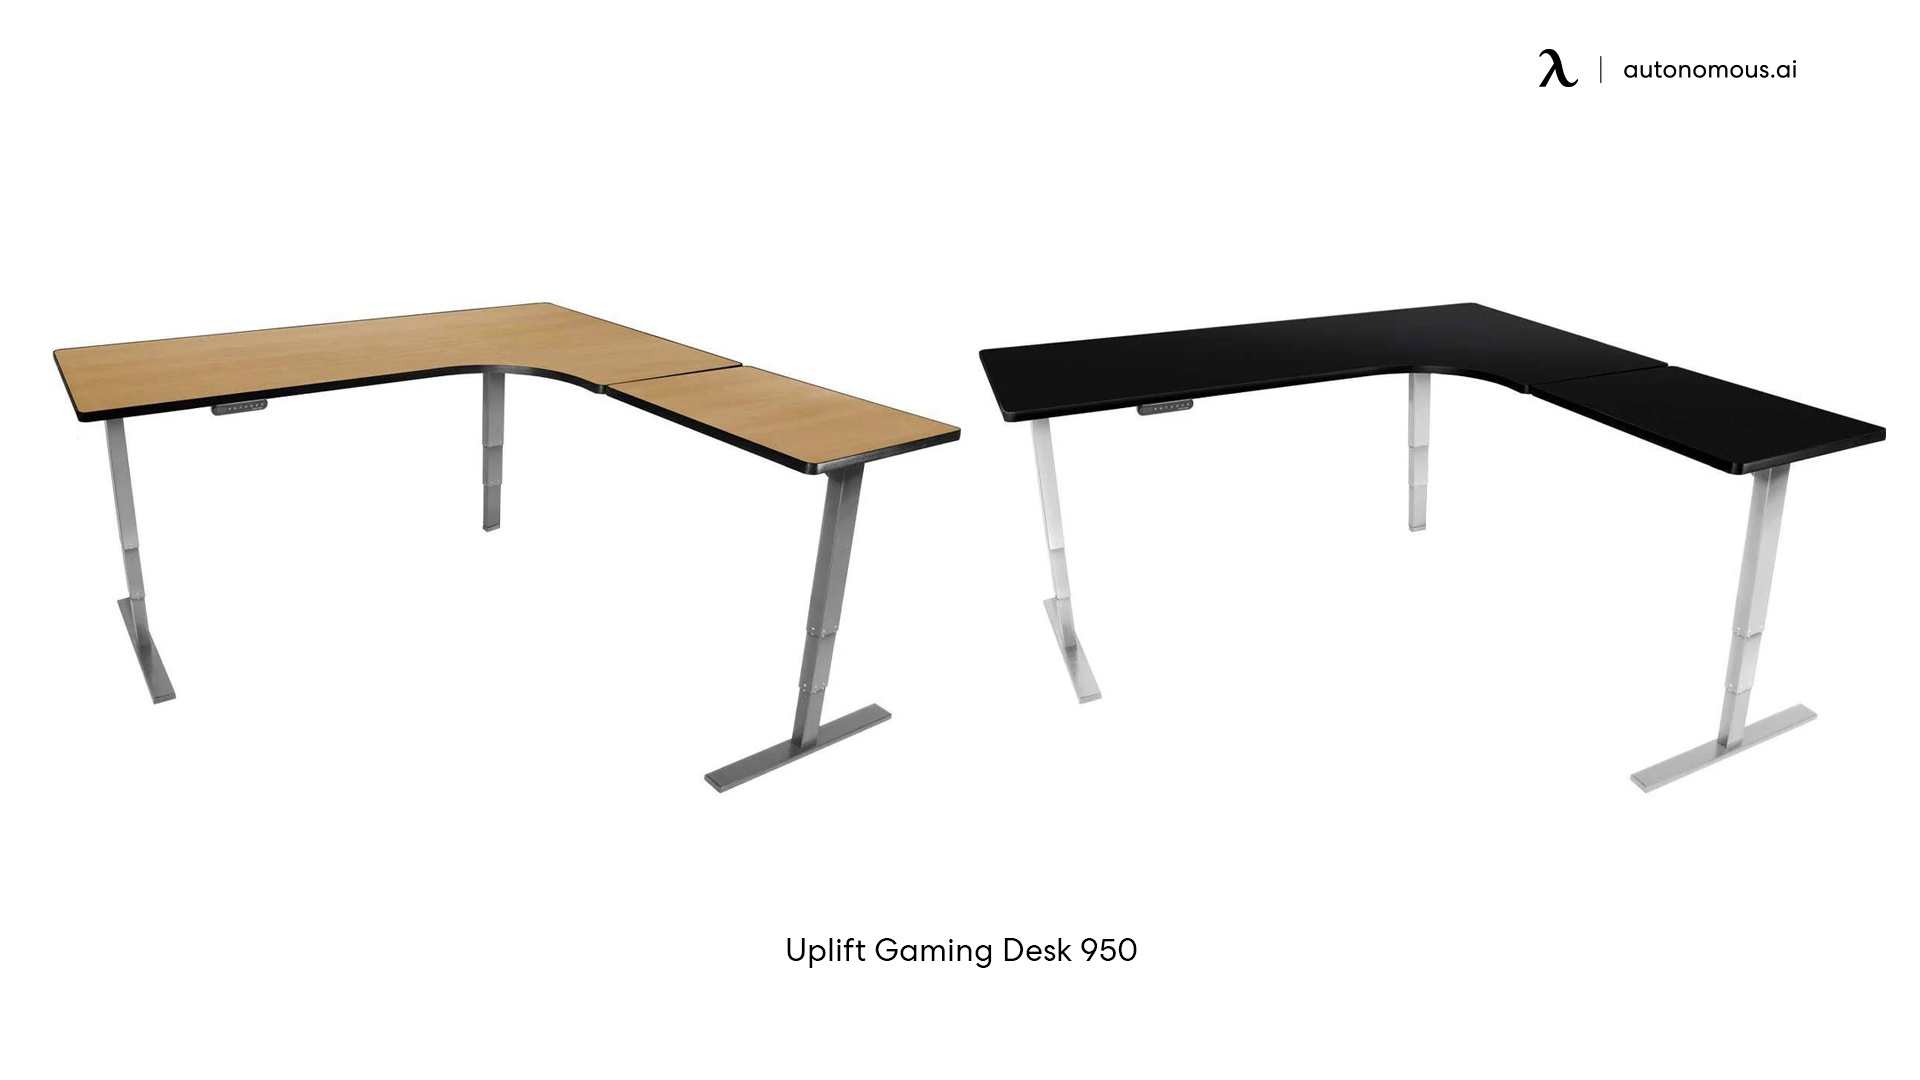 Uplift Gaming Desk 950